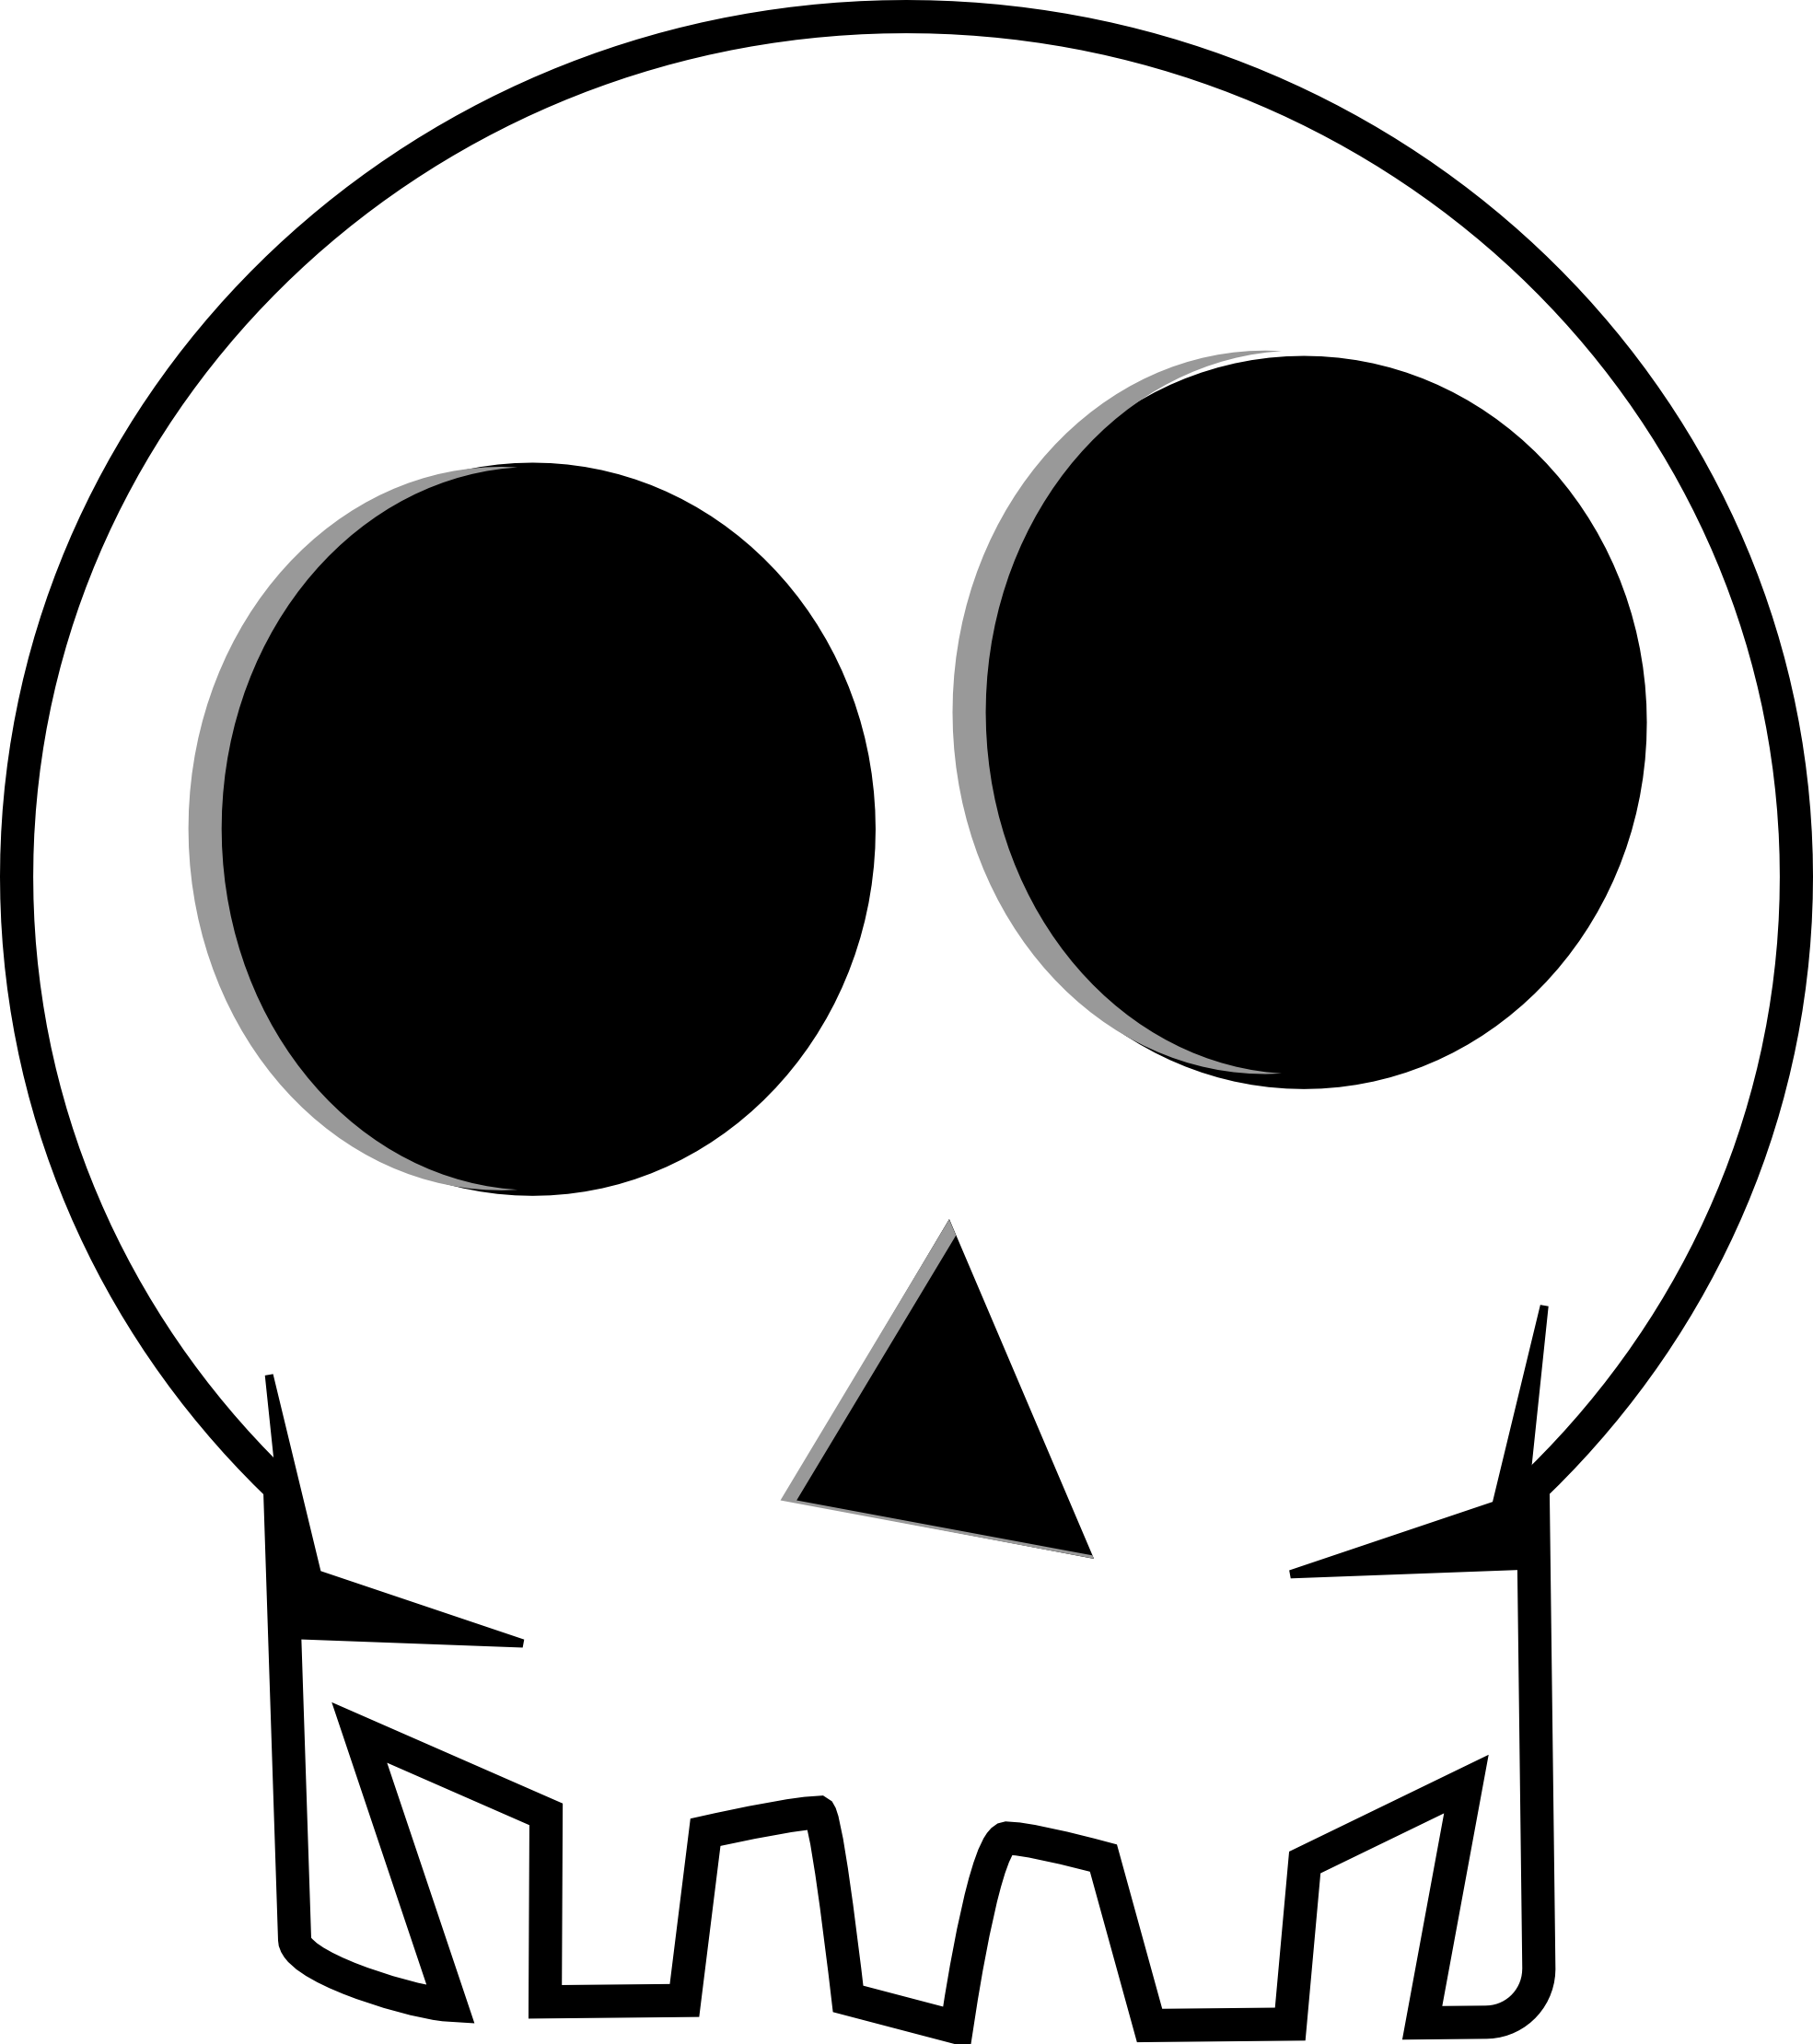 Cute skull clipart black and white - ClipartFox